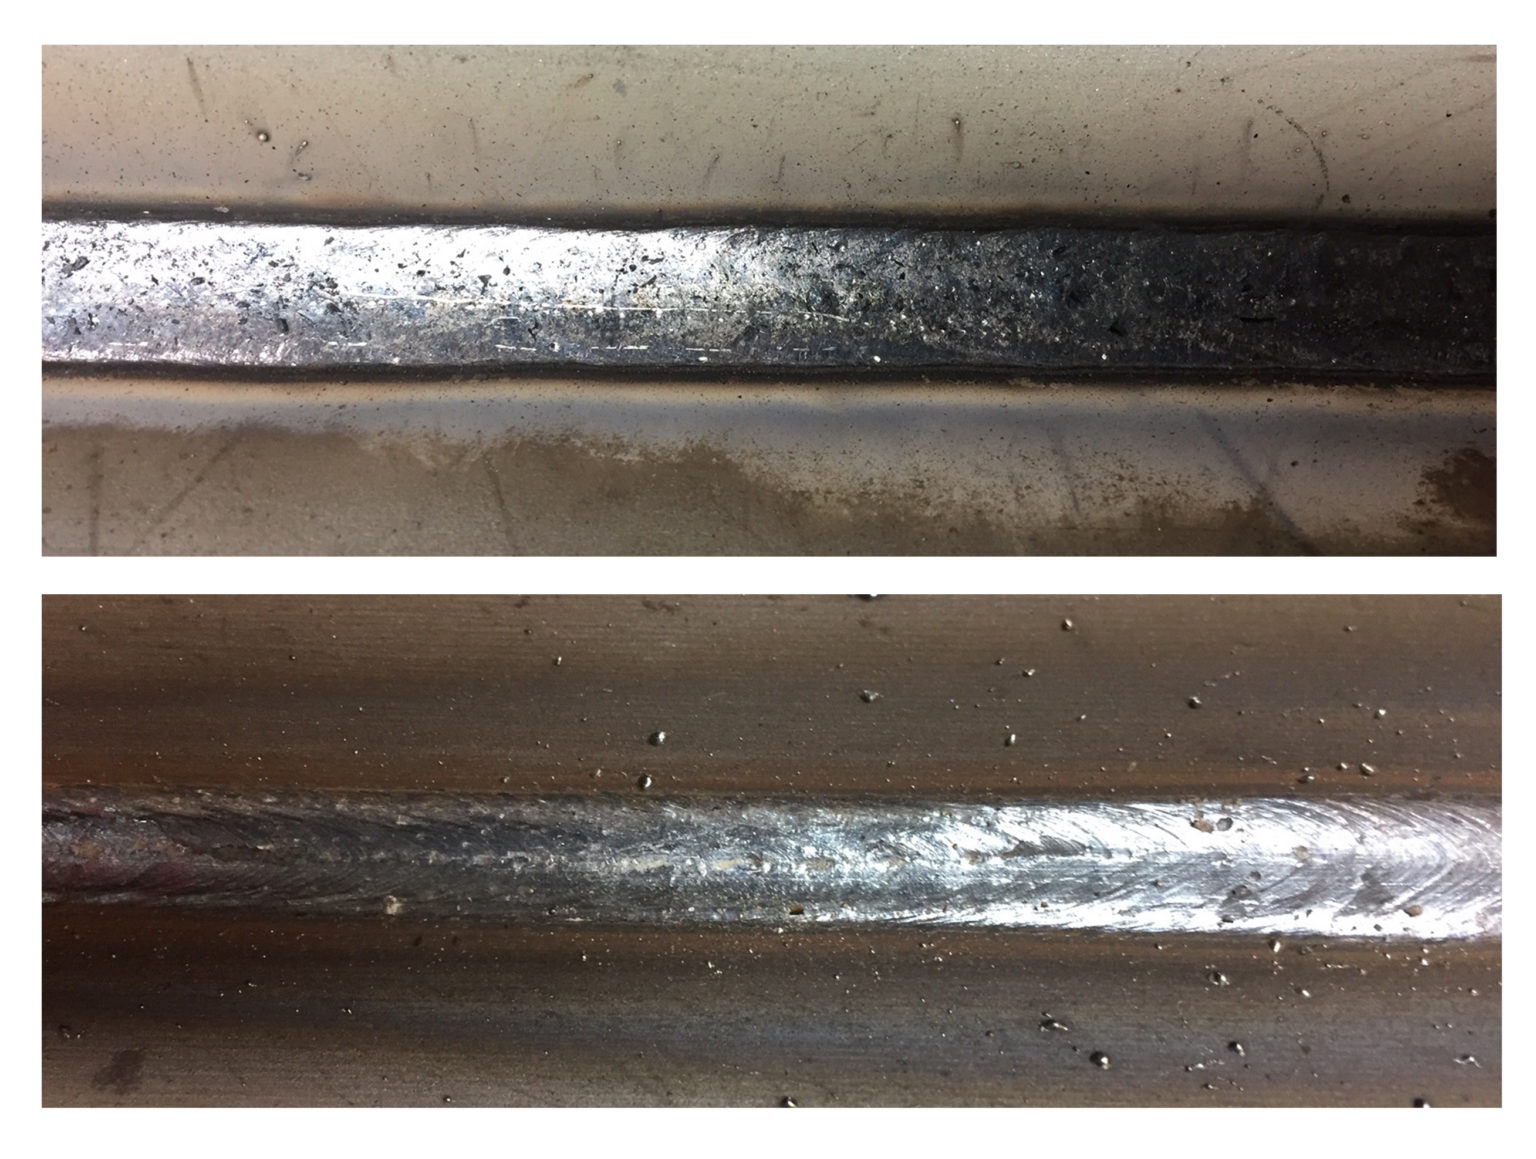 travel speed affects weld bead width in fcaw